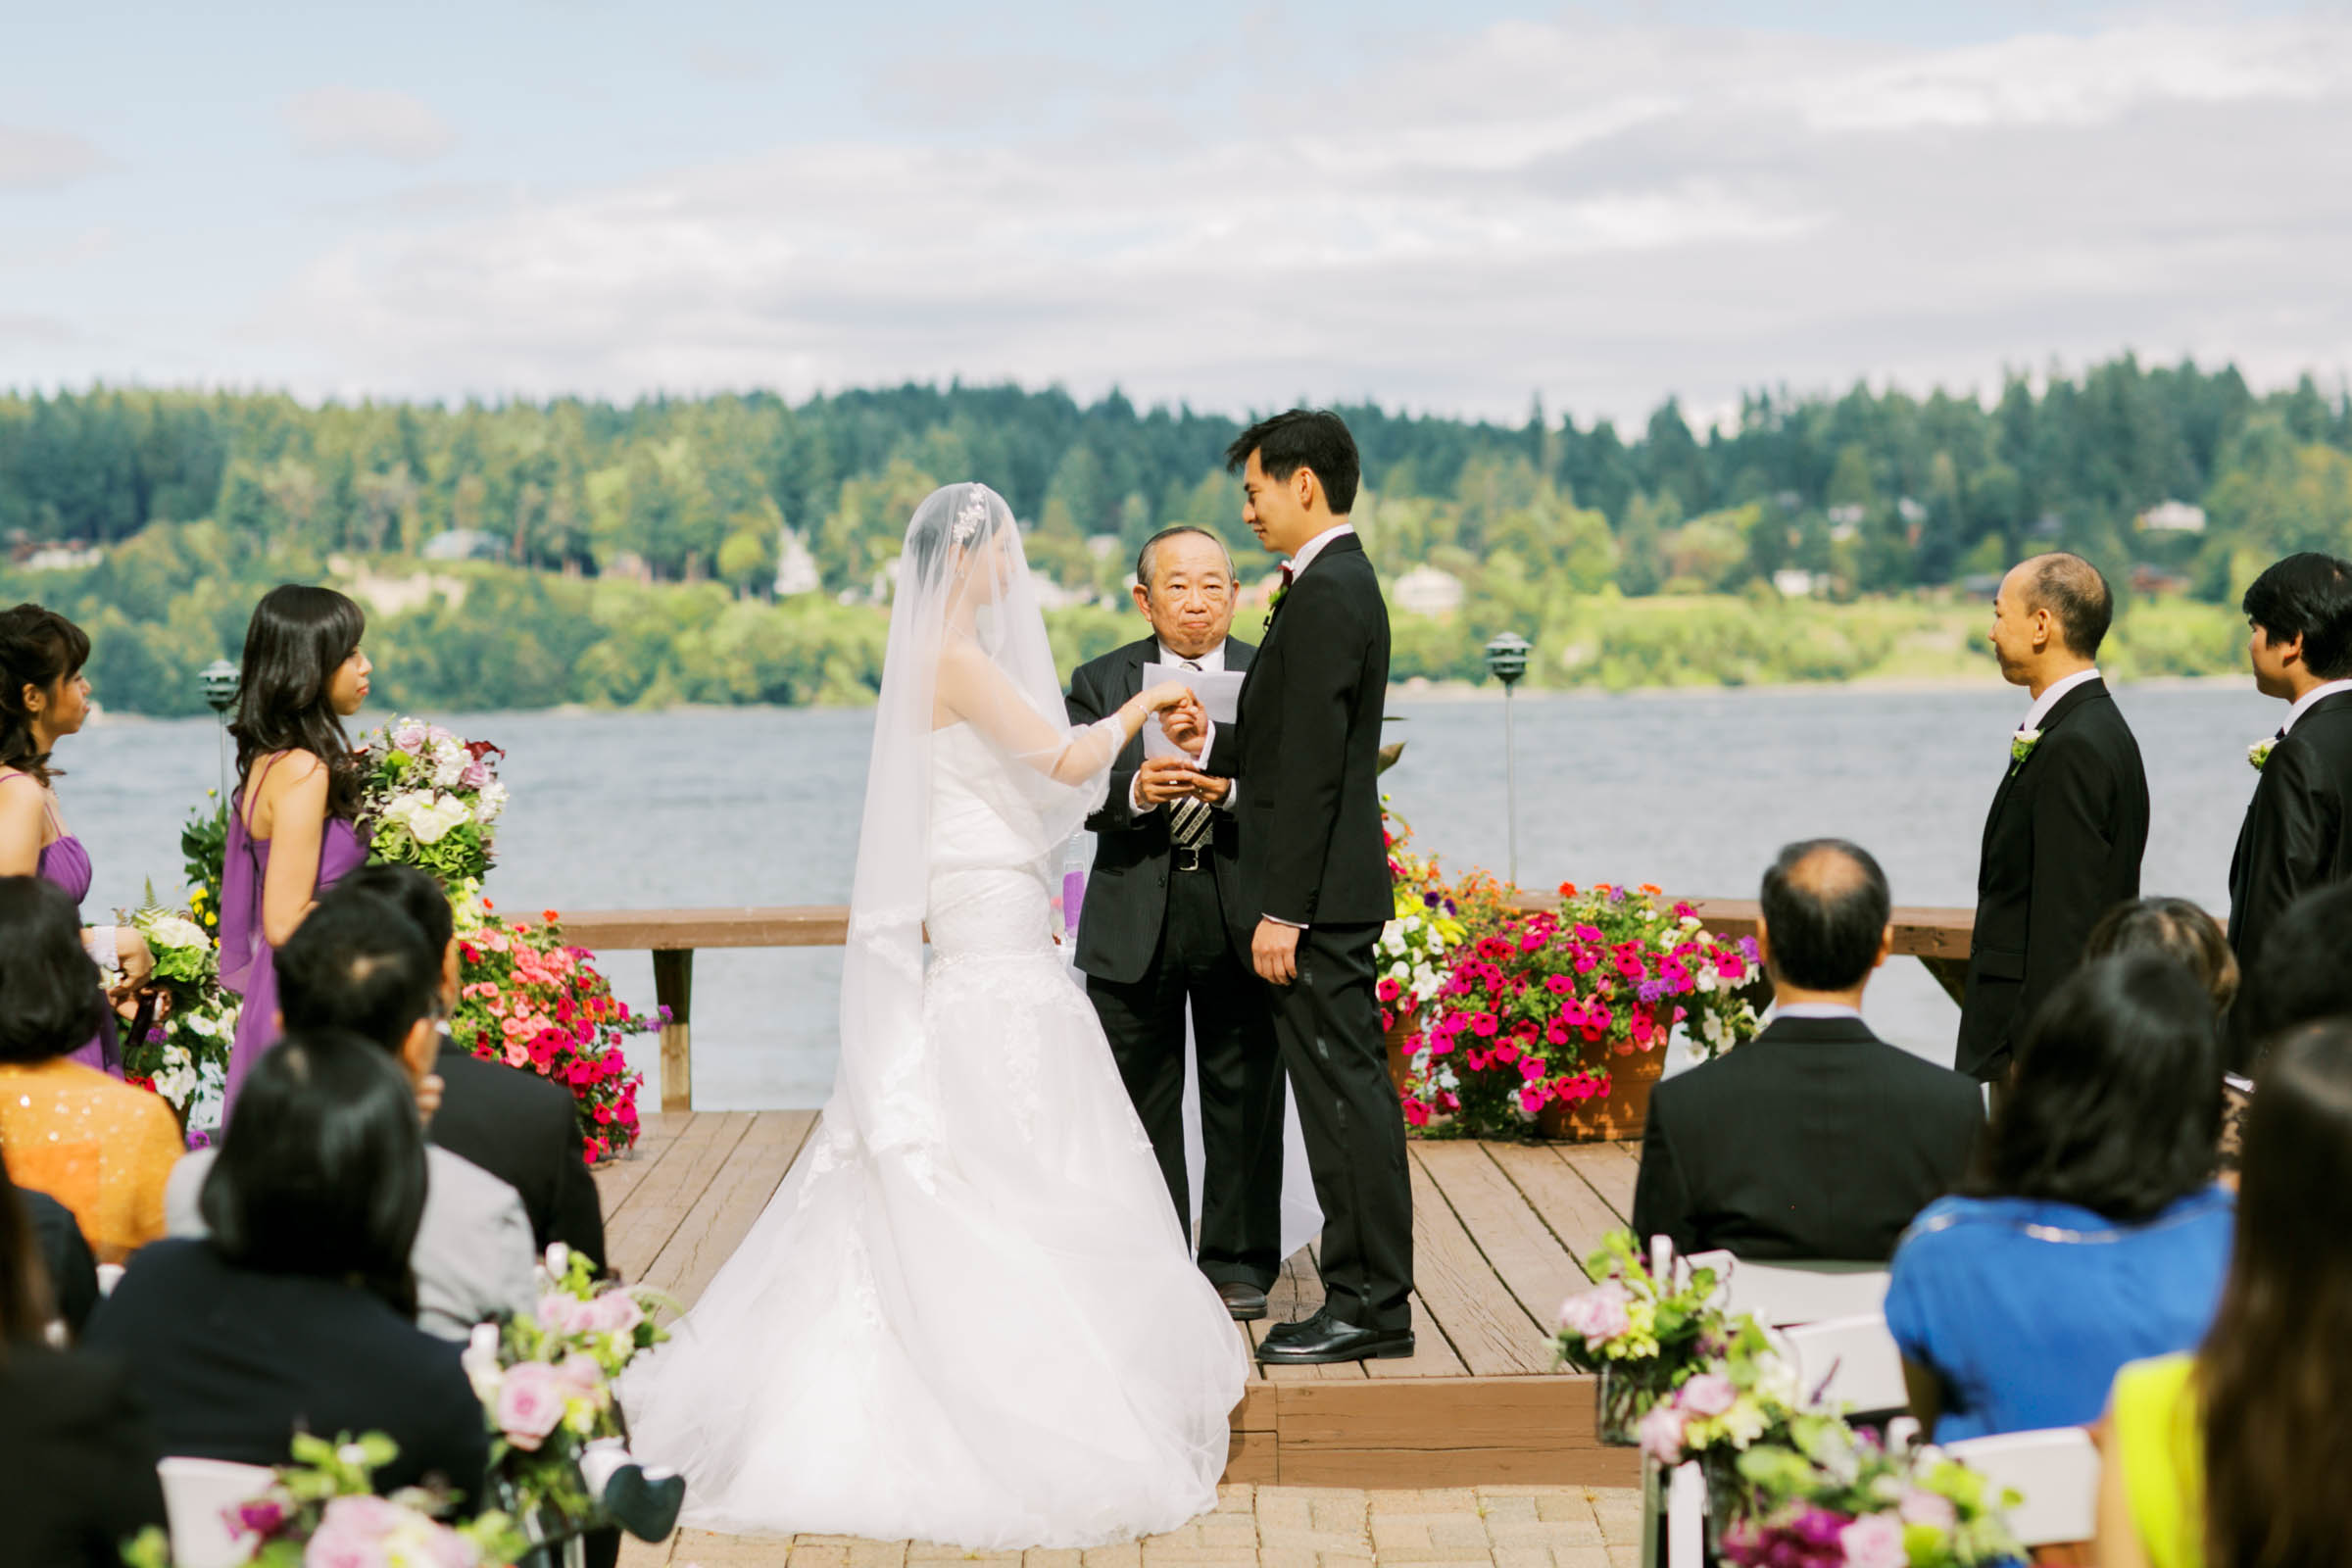 Kiana Lodge Greater Seattle wedding venue photographed by Seattle wedding photographers JENN TAI & Co